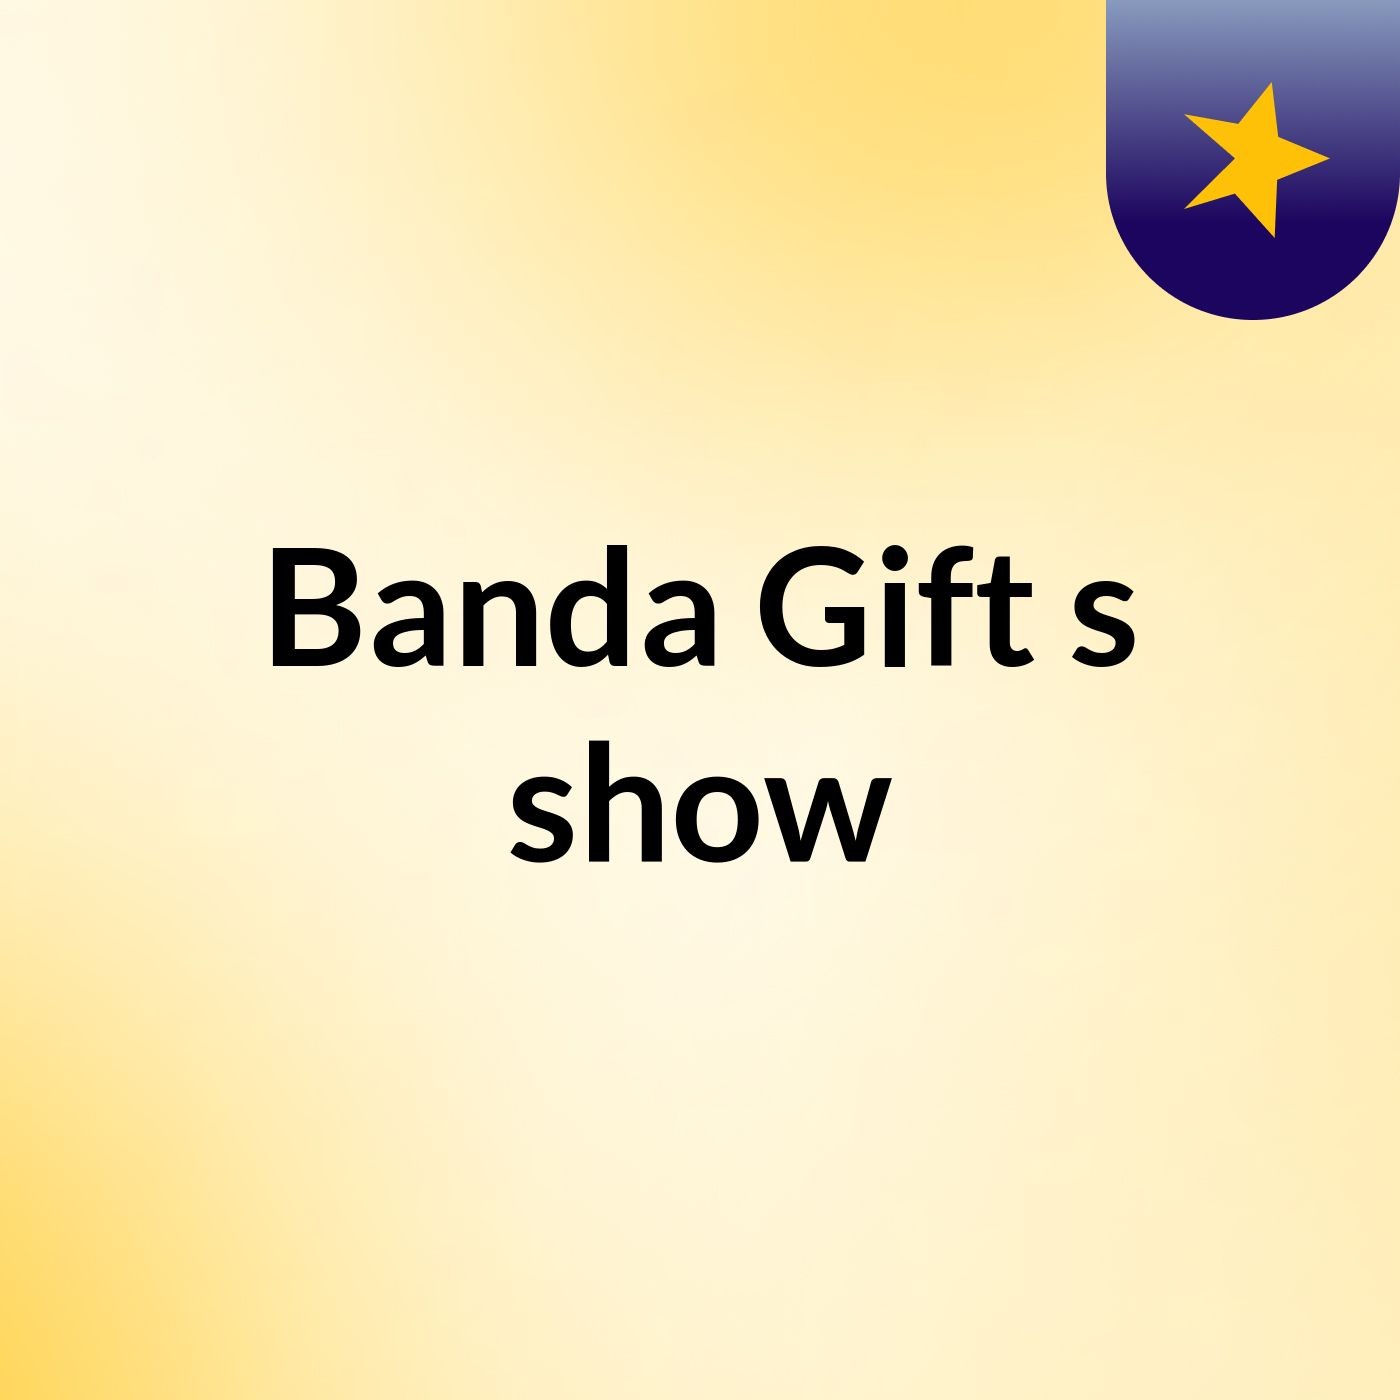 Banda Gift's show